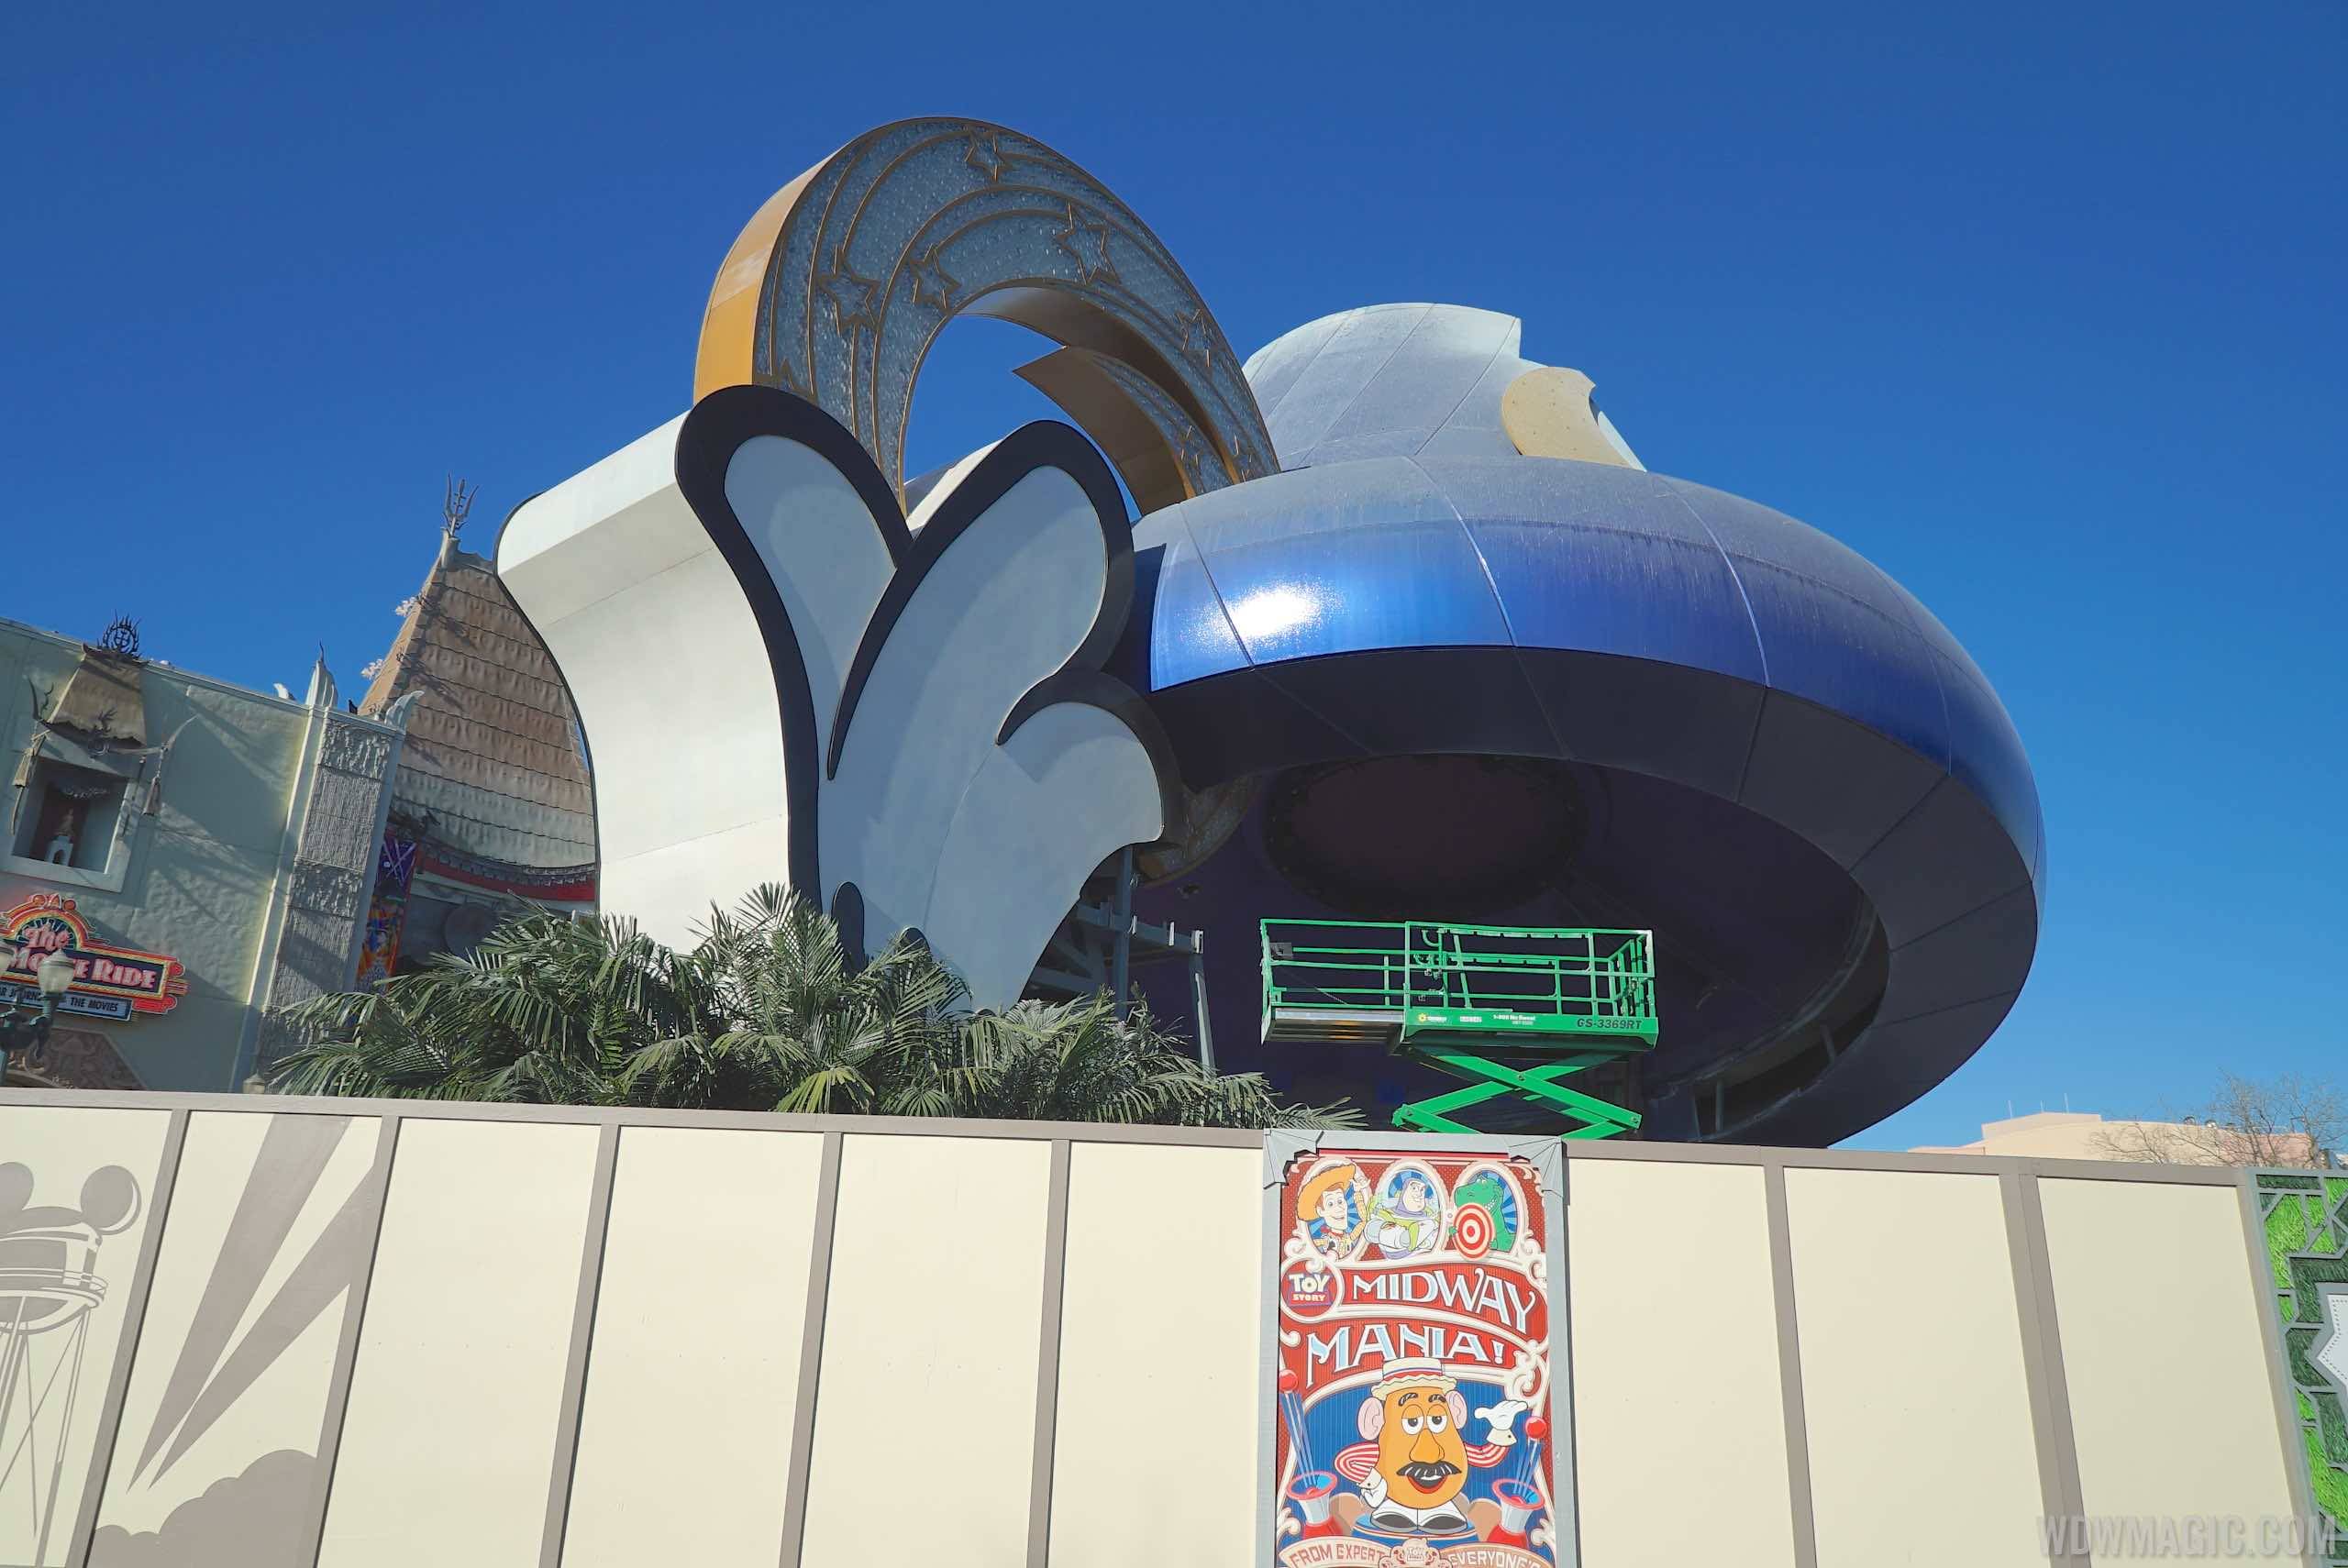 PHOTOS - Sorcerer Mickey Hat icon demolition at Disney's Hollywood Studios